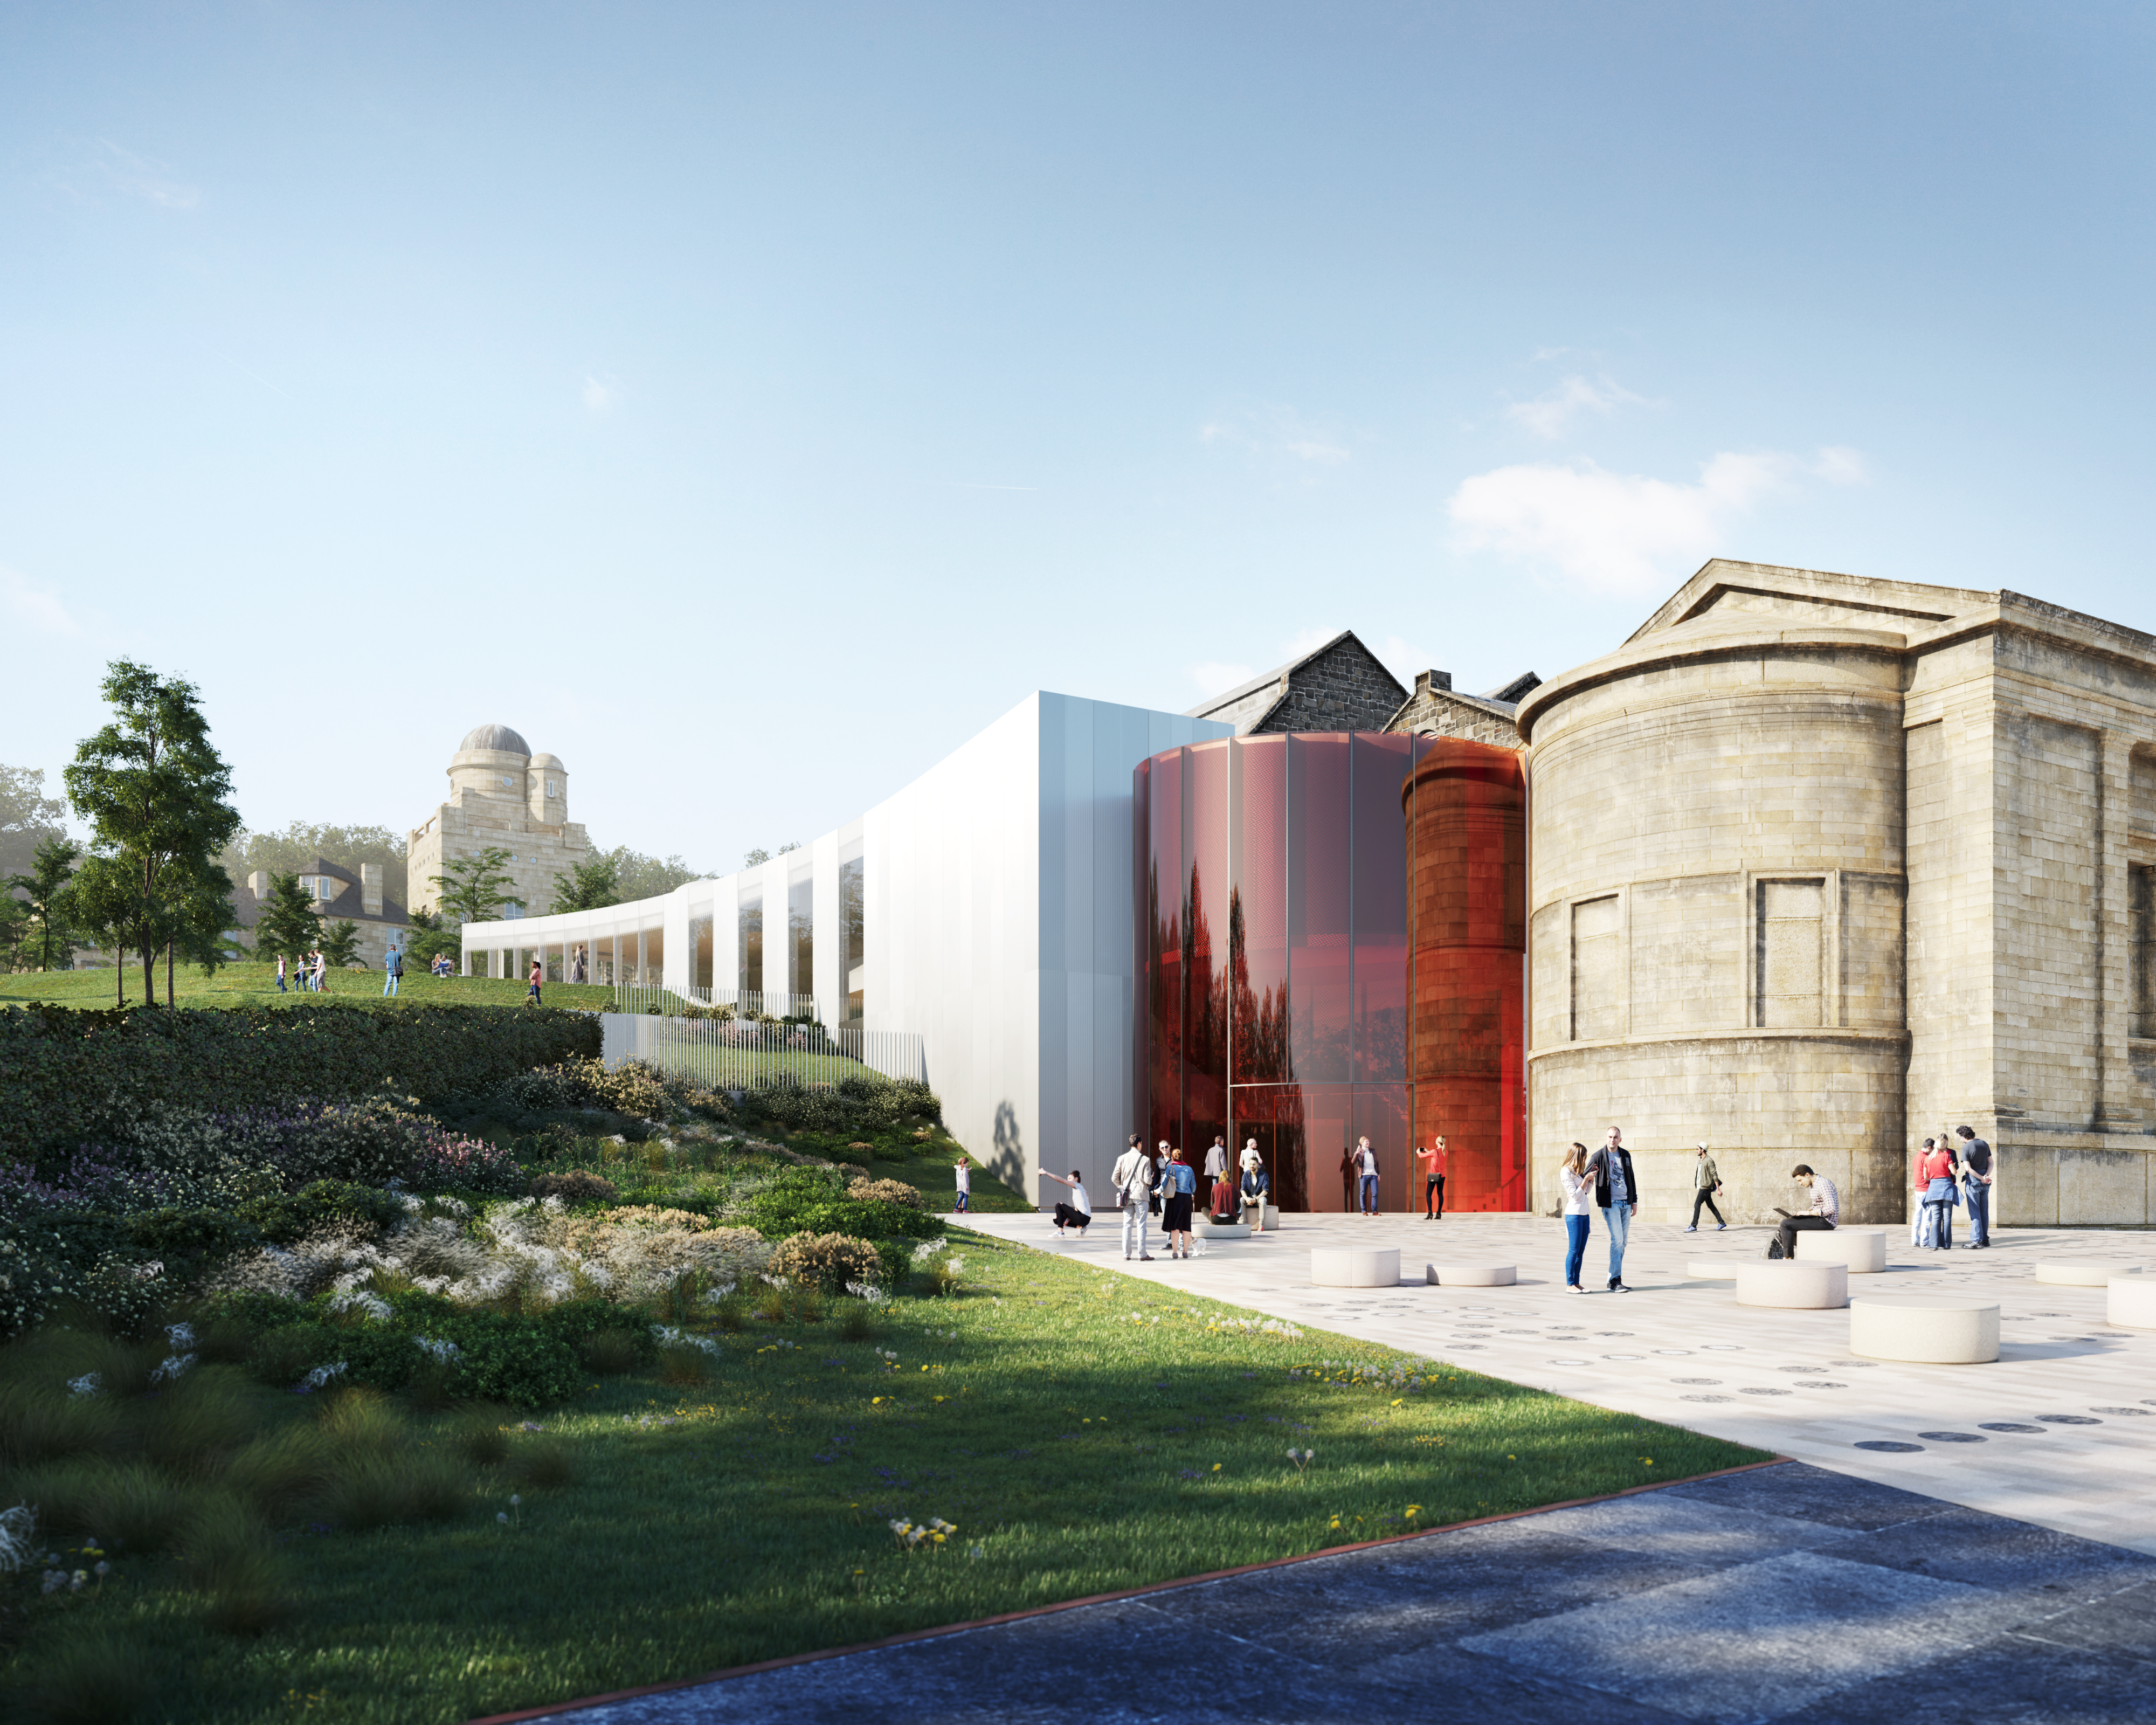 Paisley Museum transformation fundraising campaign hits £1m milestone